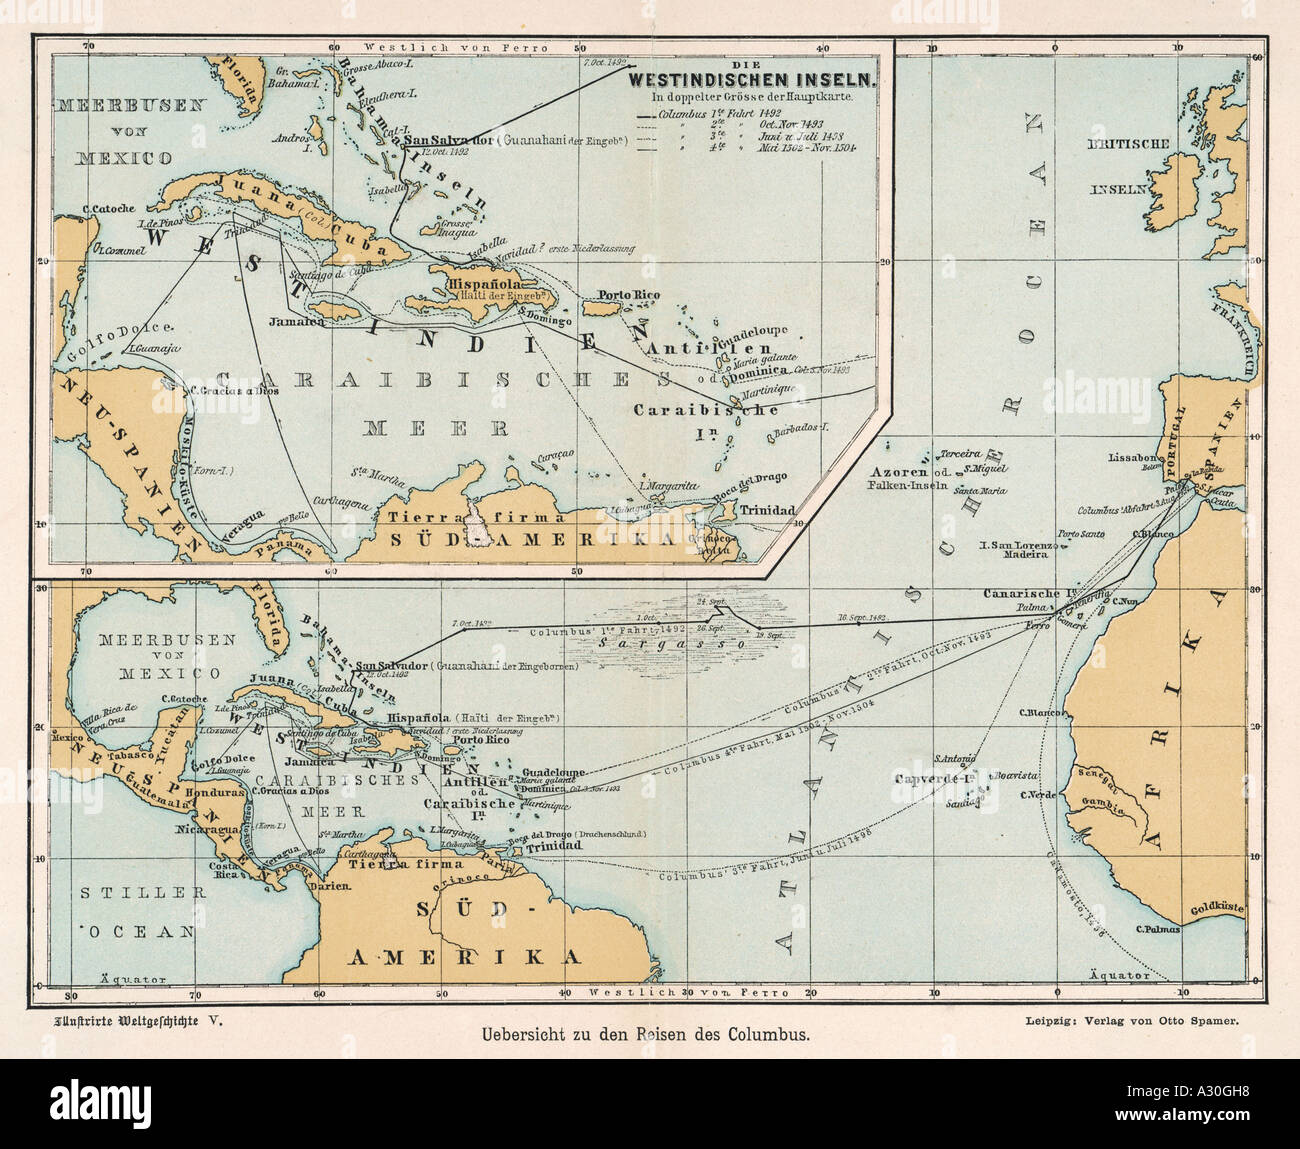 Columbus Voyage Map Stock Photo: 6074391 - Alamy